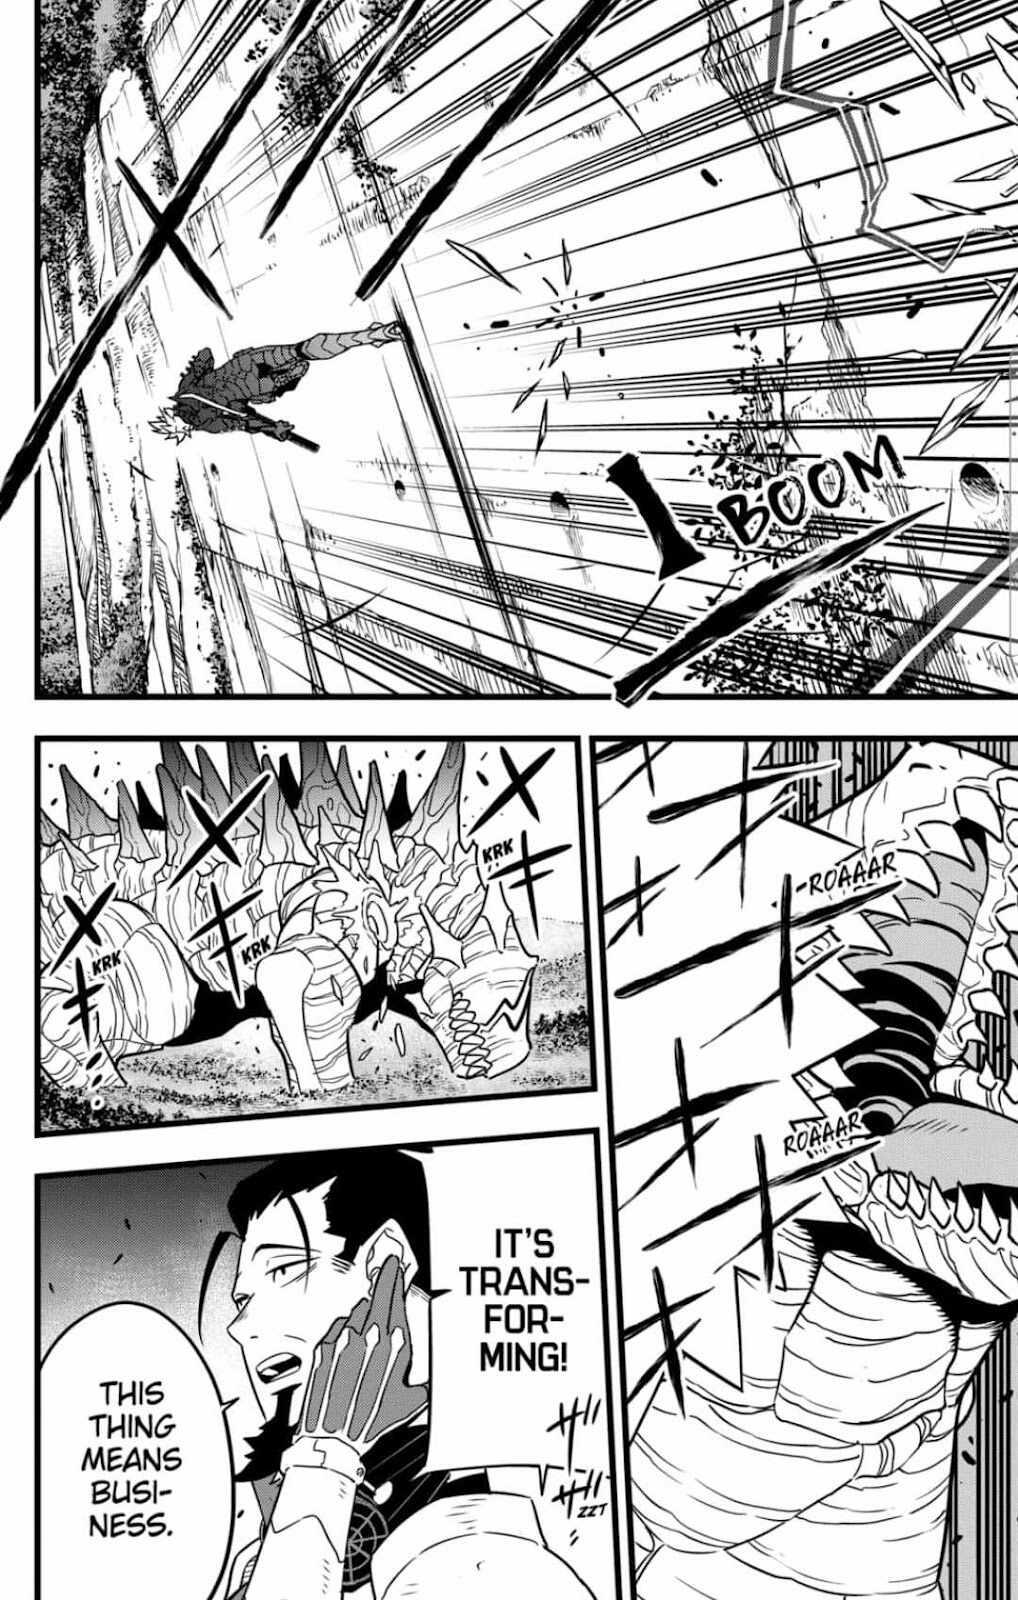 Kaiju No. 8 Chapter 62 page 2 - Mangakakalot